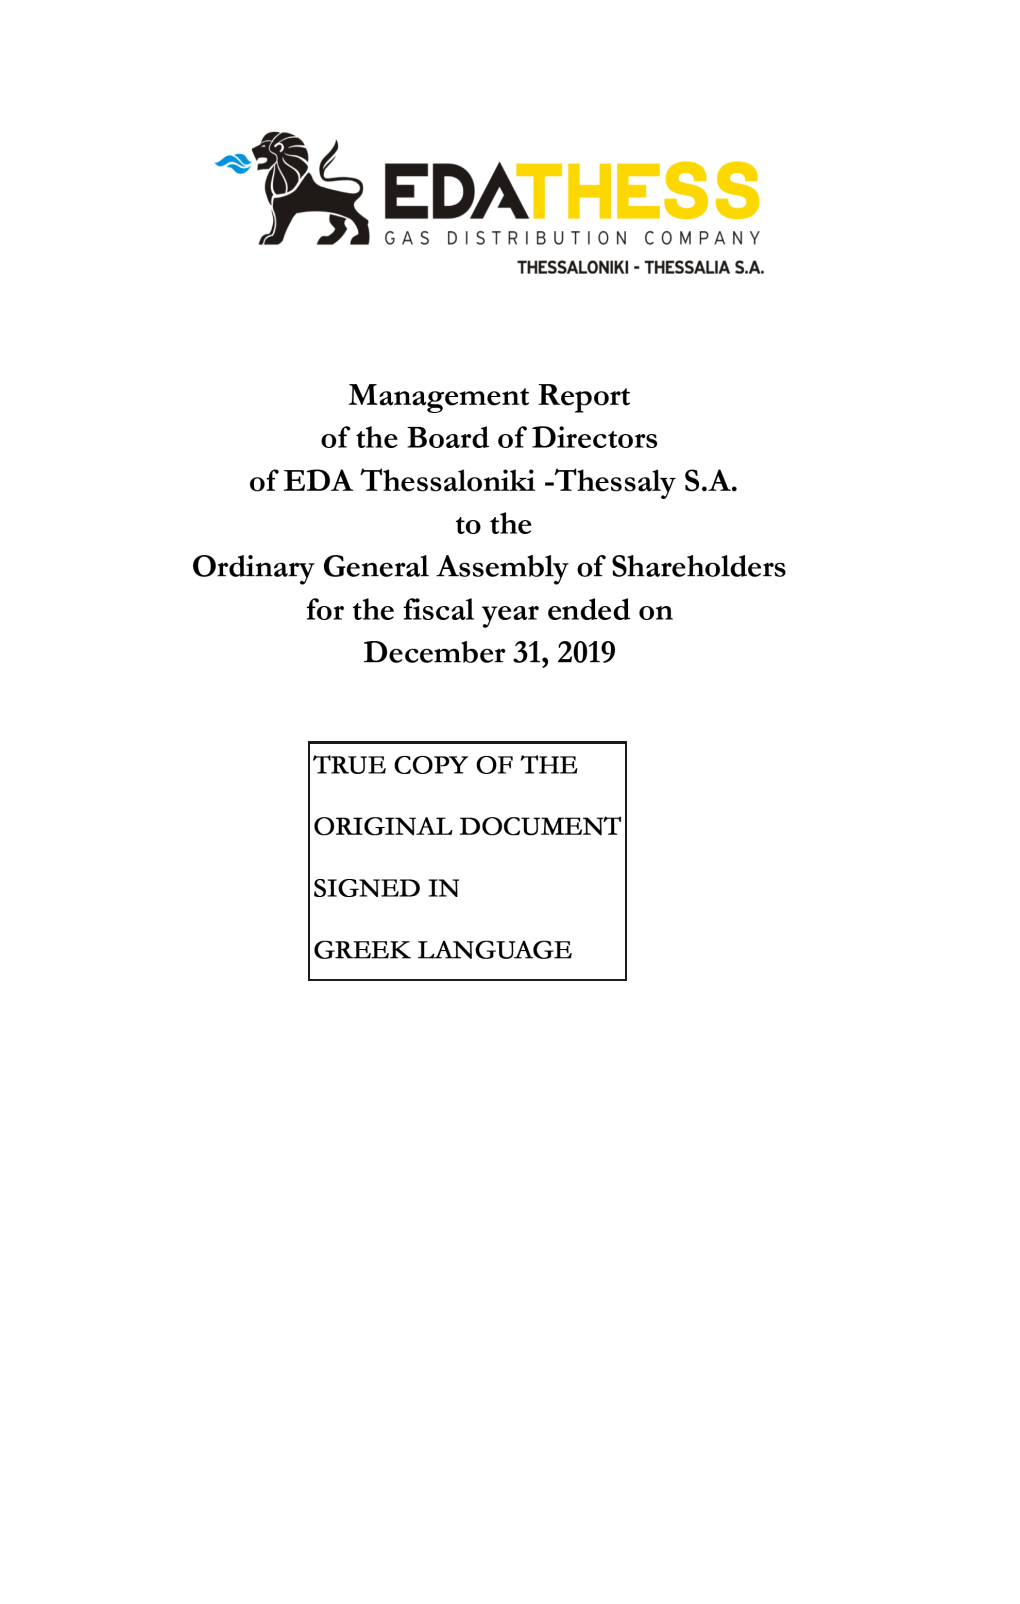 Bod Management Report 201